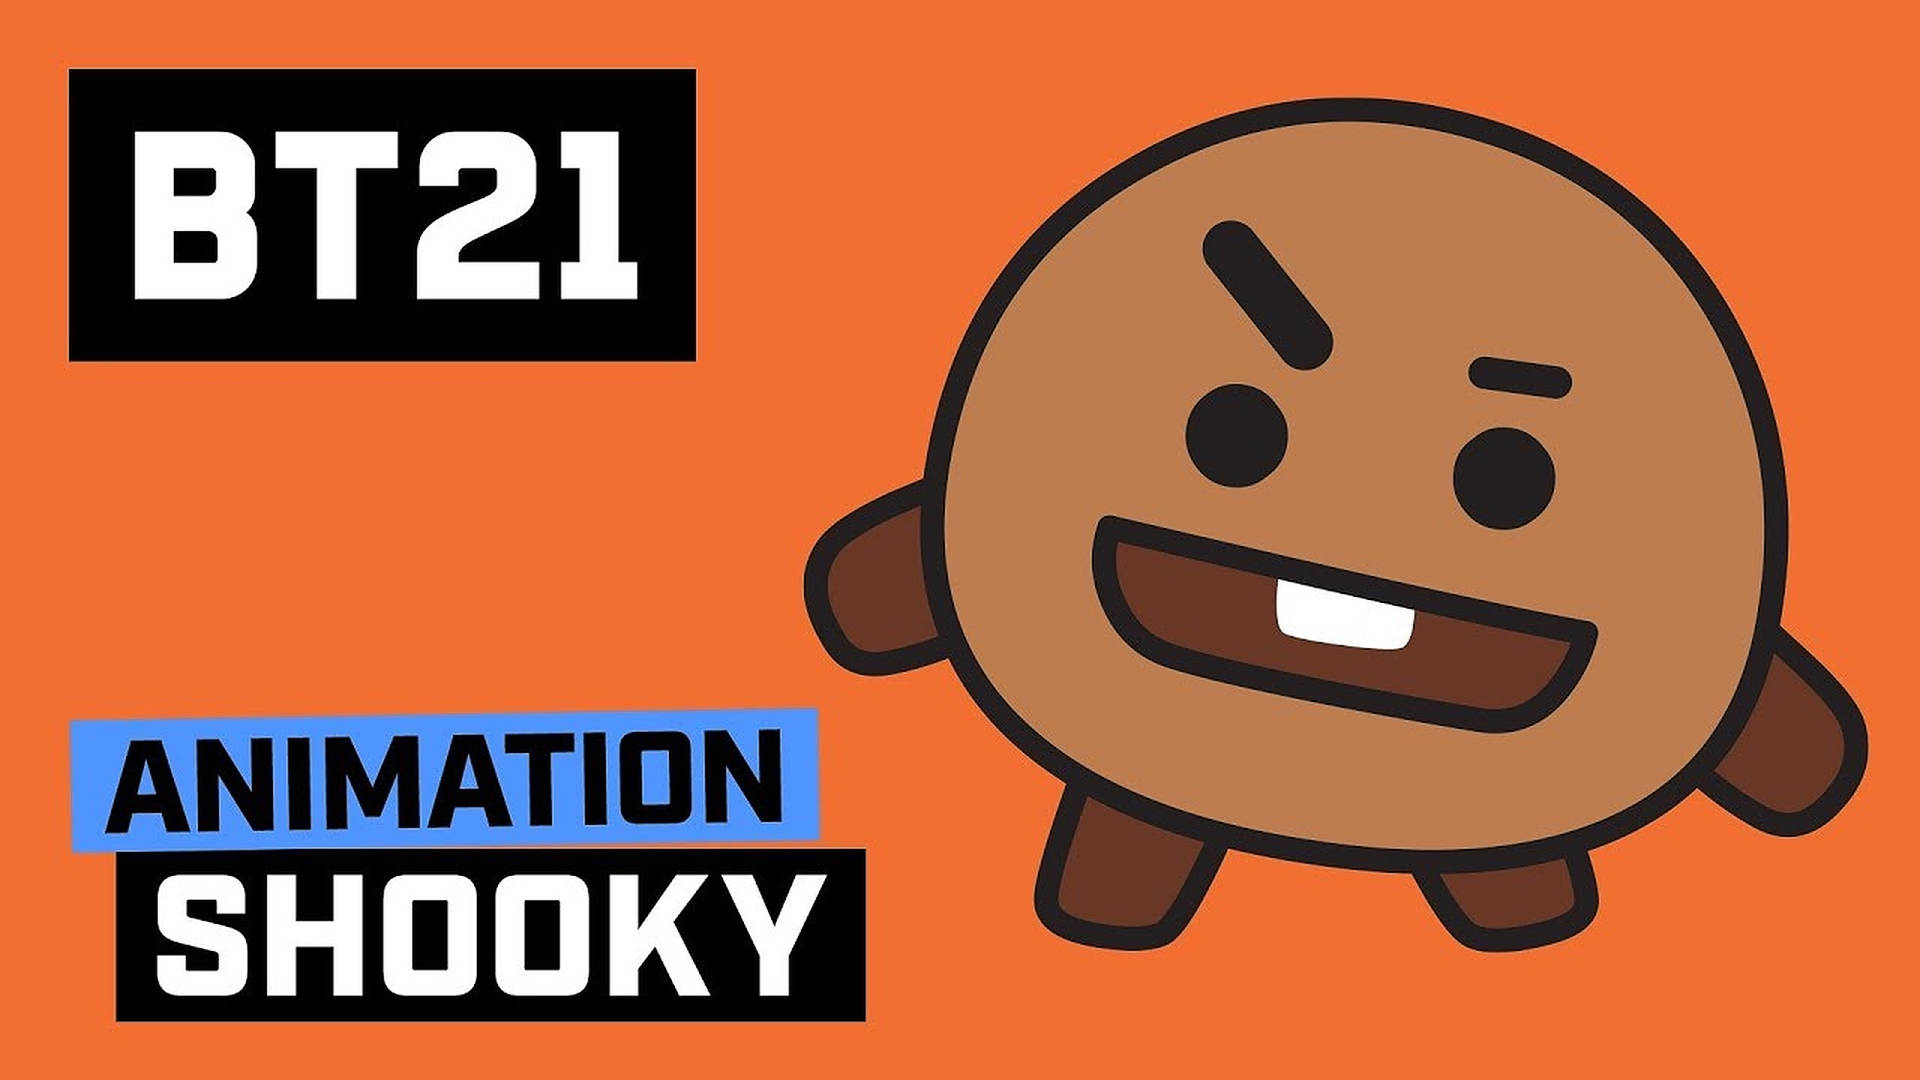 Shooky Bt21 Animation Background